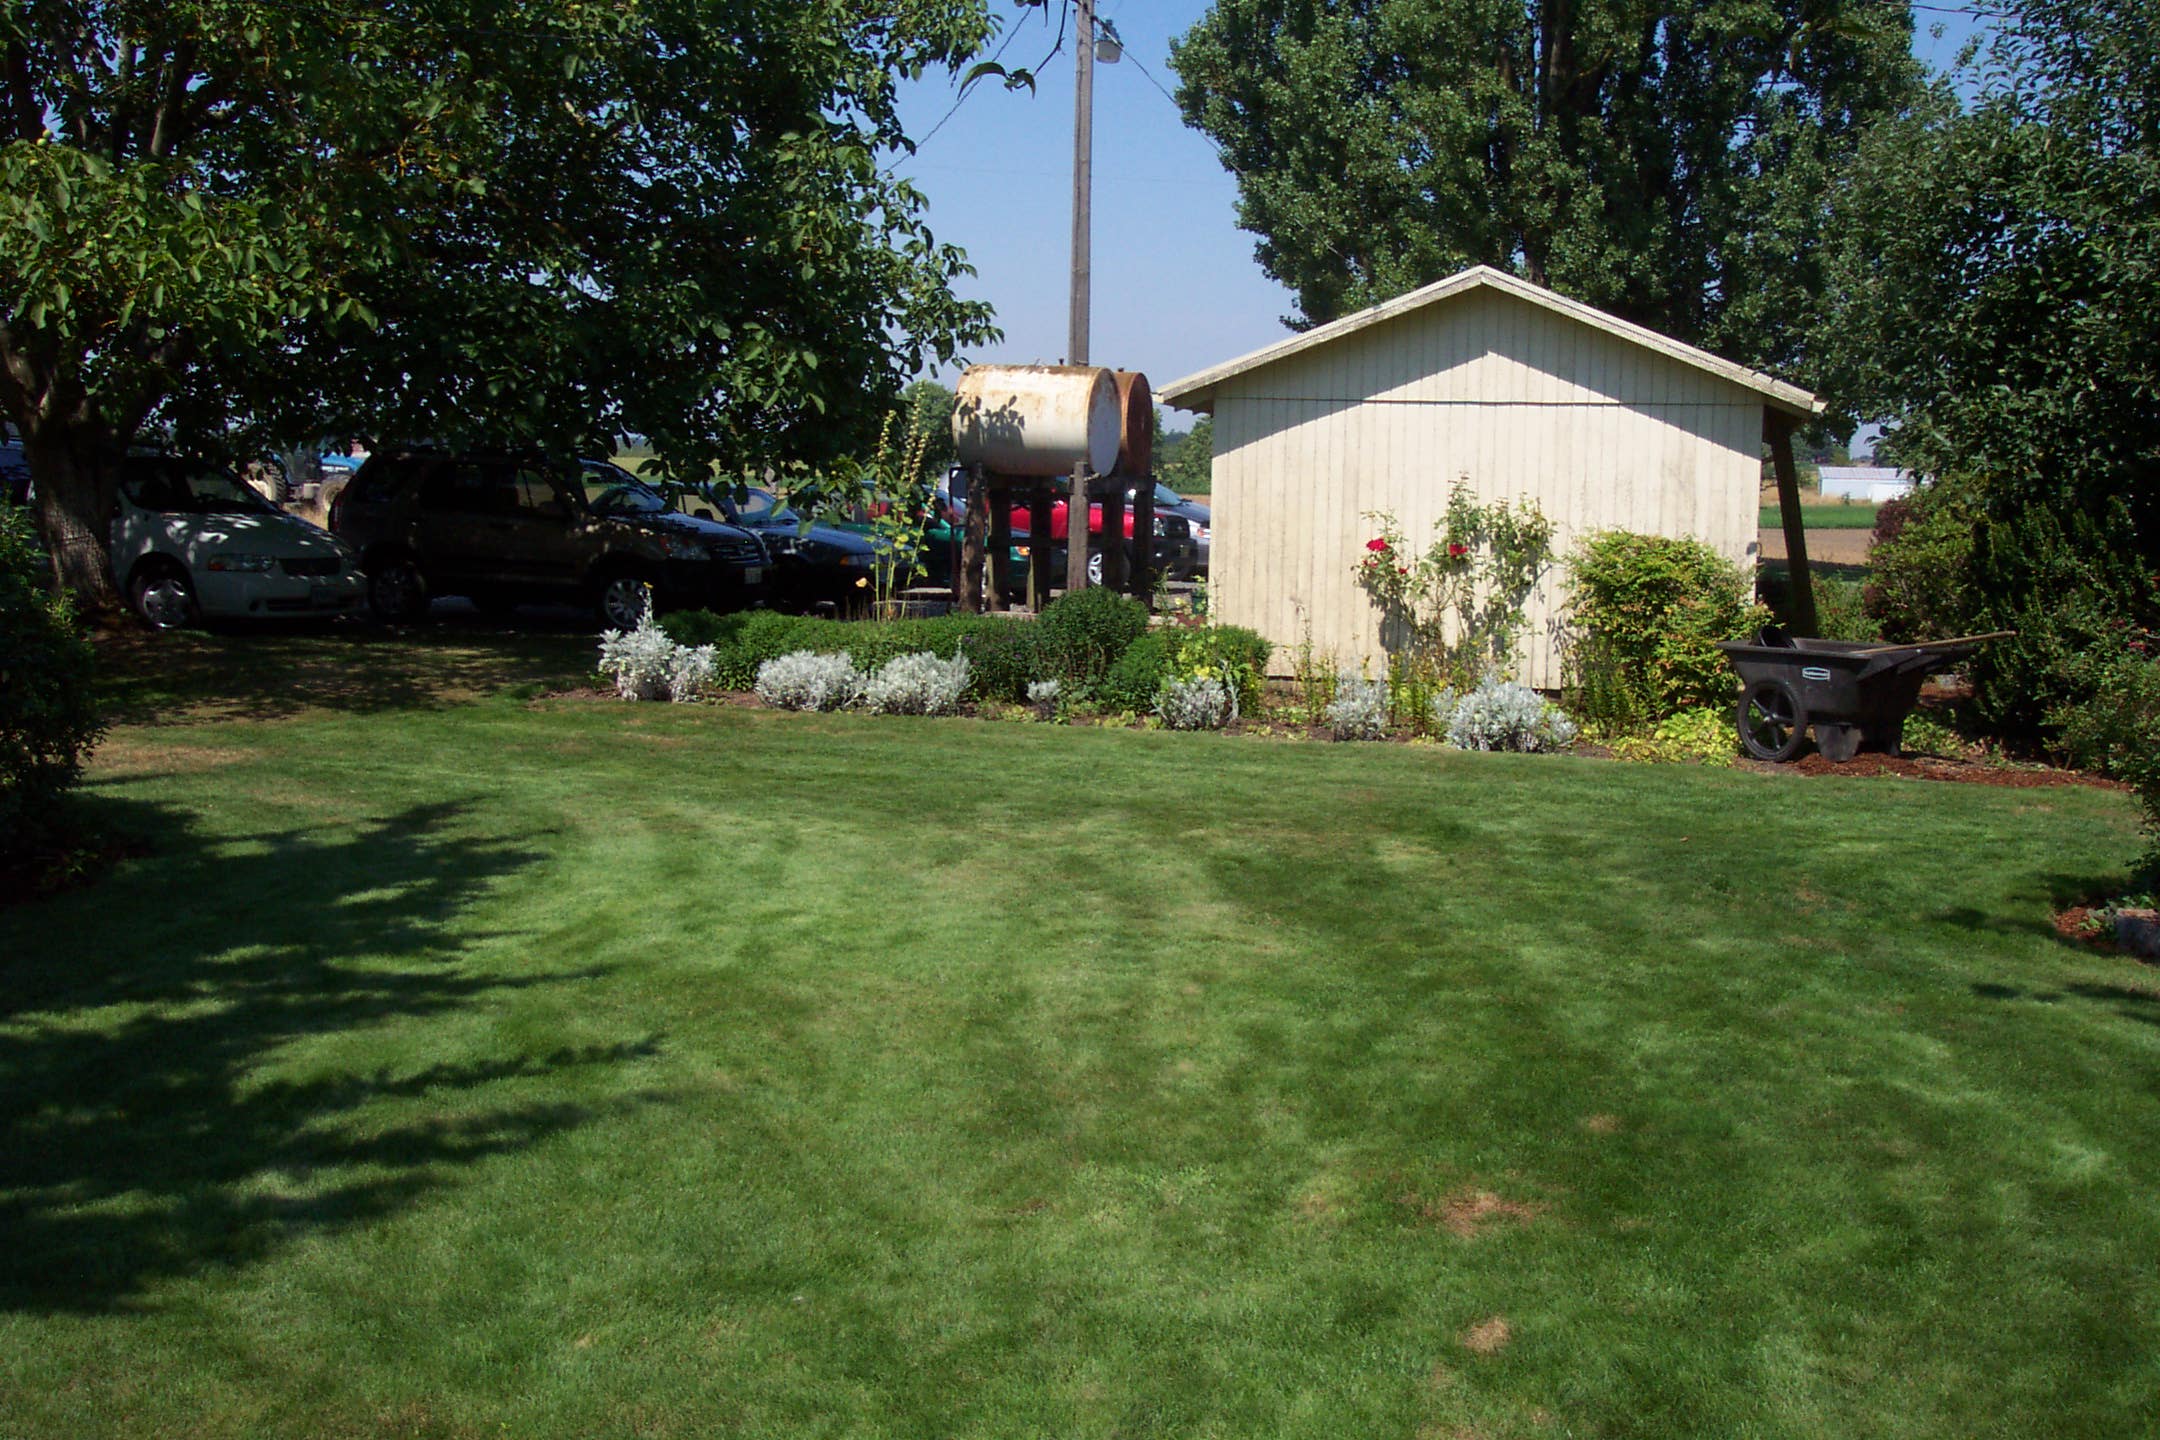 August 16, 2008, yard of Joe and Fran's home.